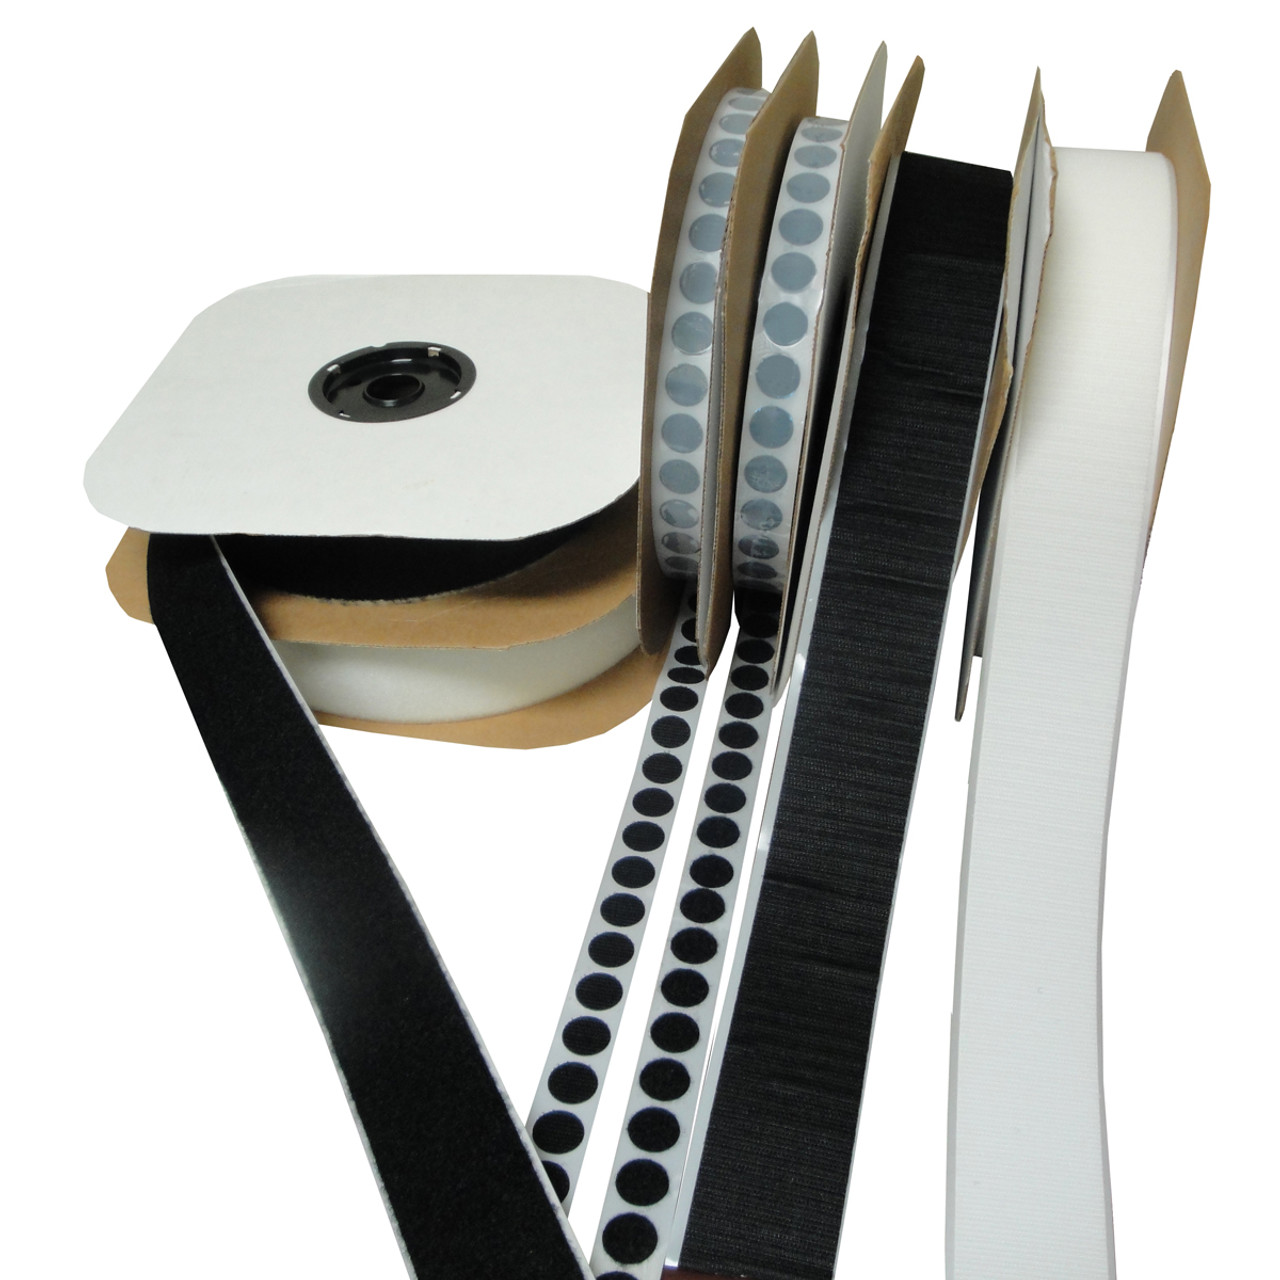 VELCRO Brand Industrial Strength Velcro Self Stick Tape 2 x 15